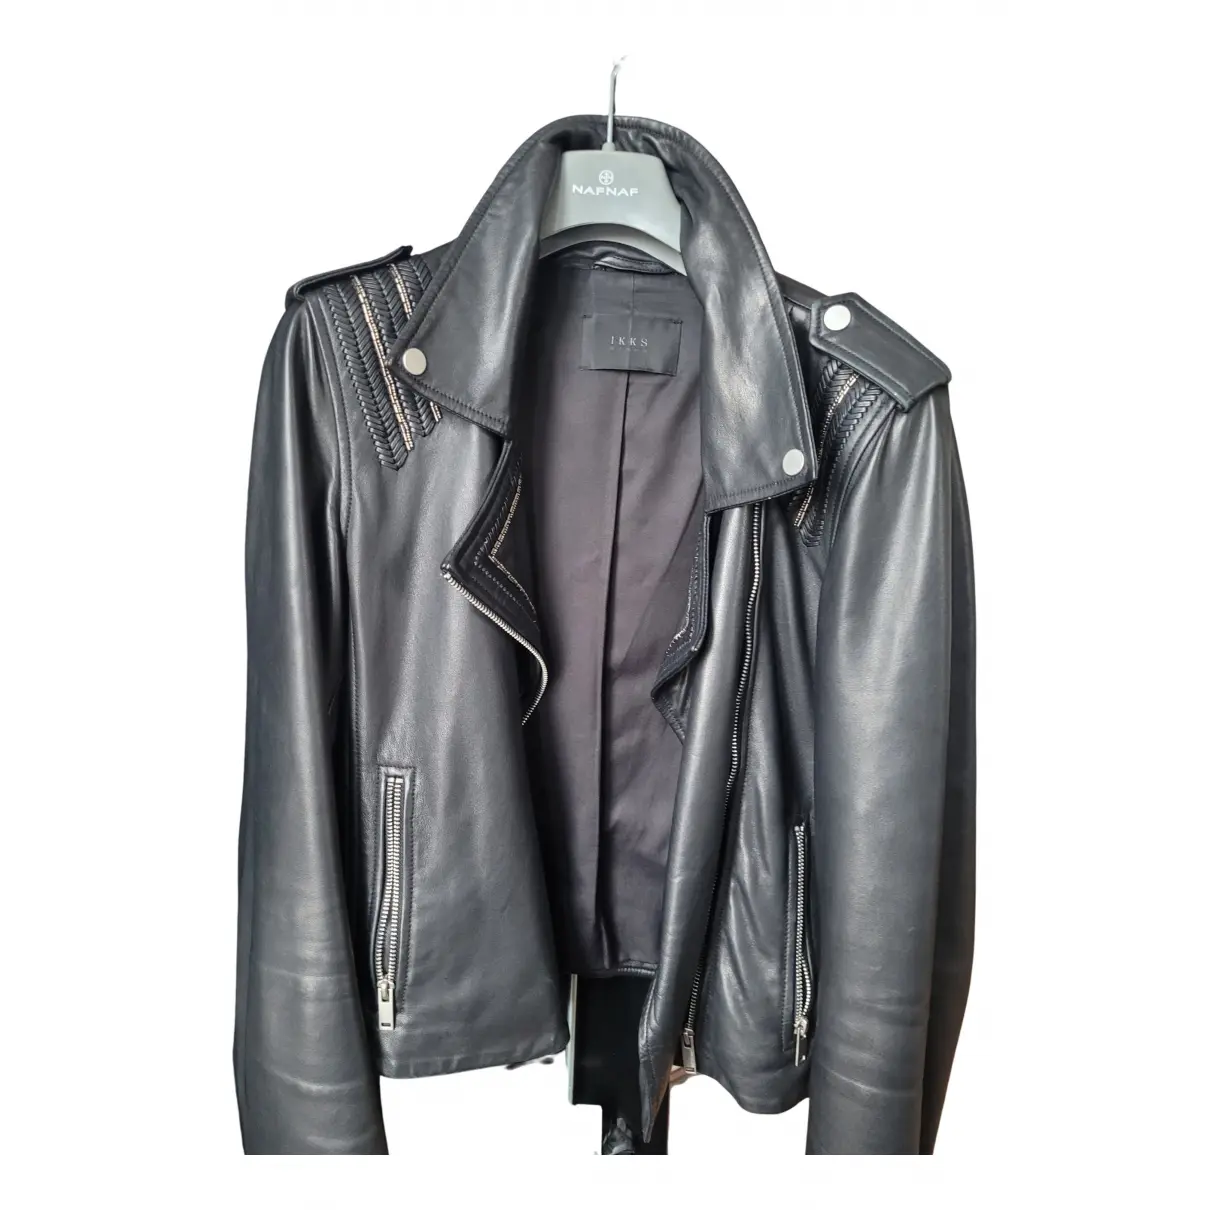 Leather jacket Ikks